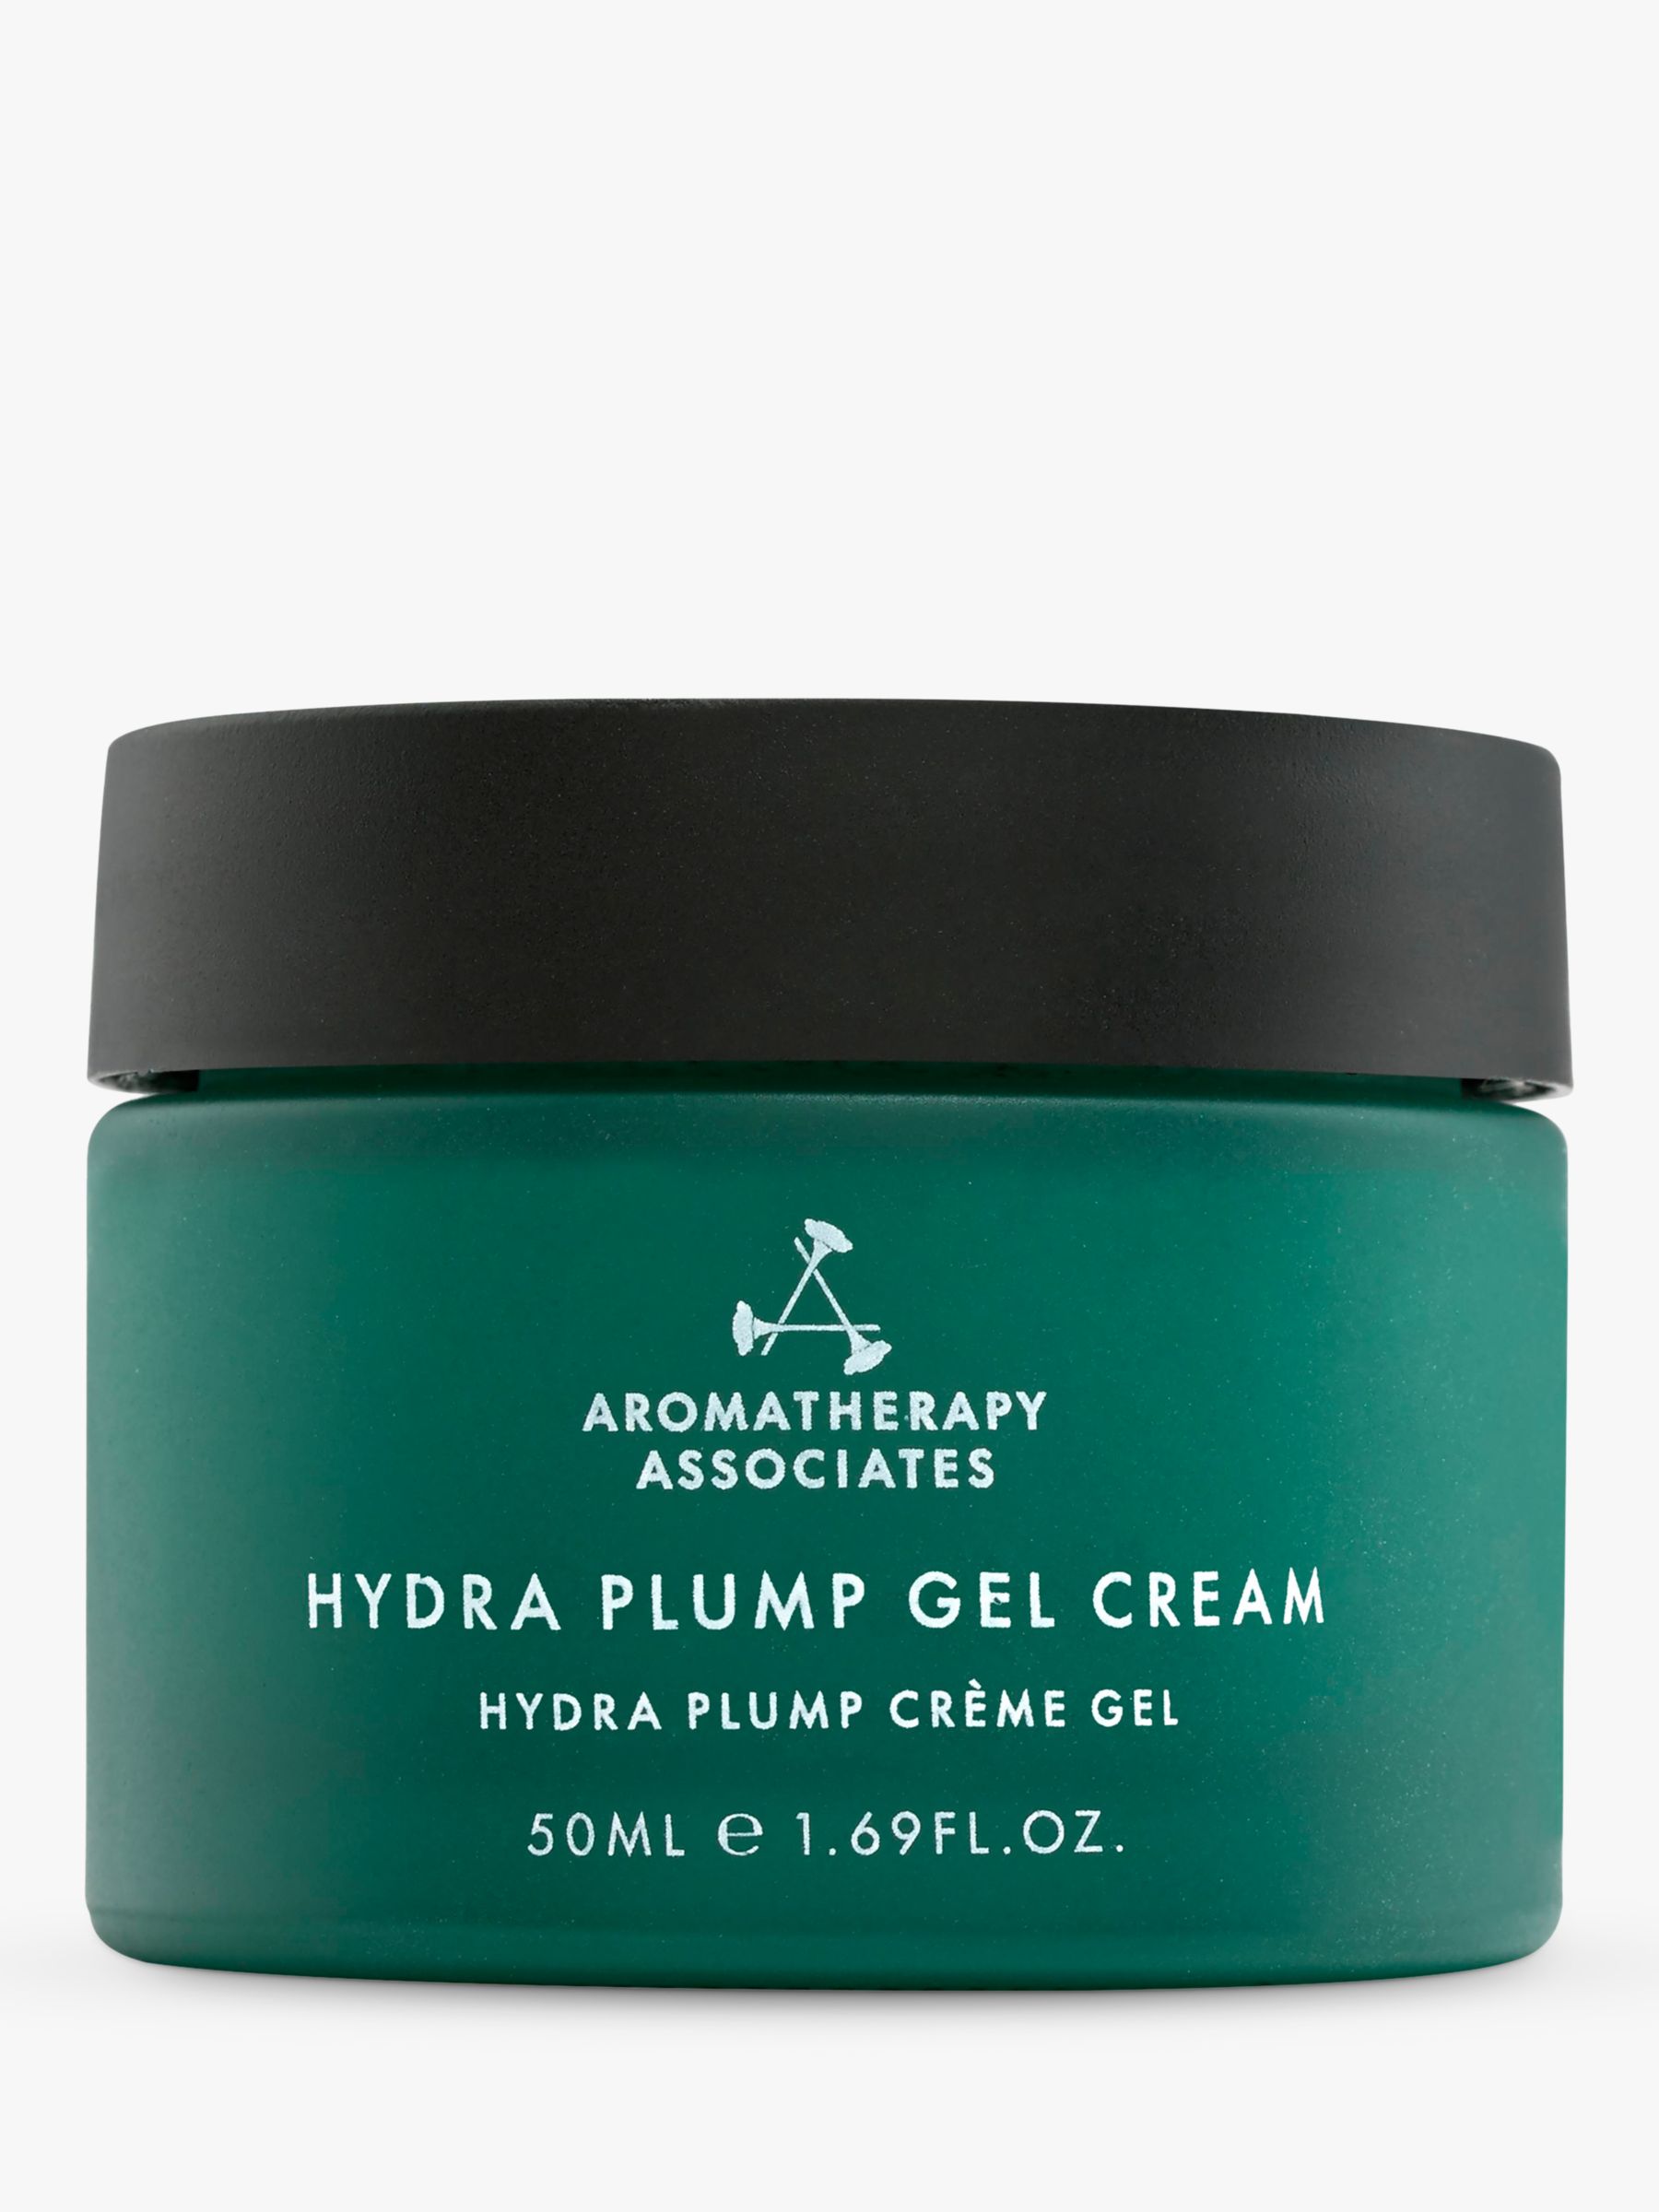 Aromatherapy Associates Hydra Plump Gel Cream, 50ml 2